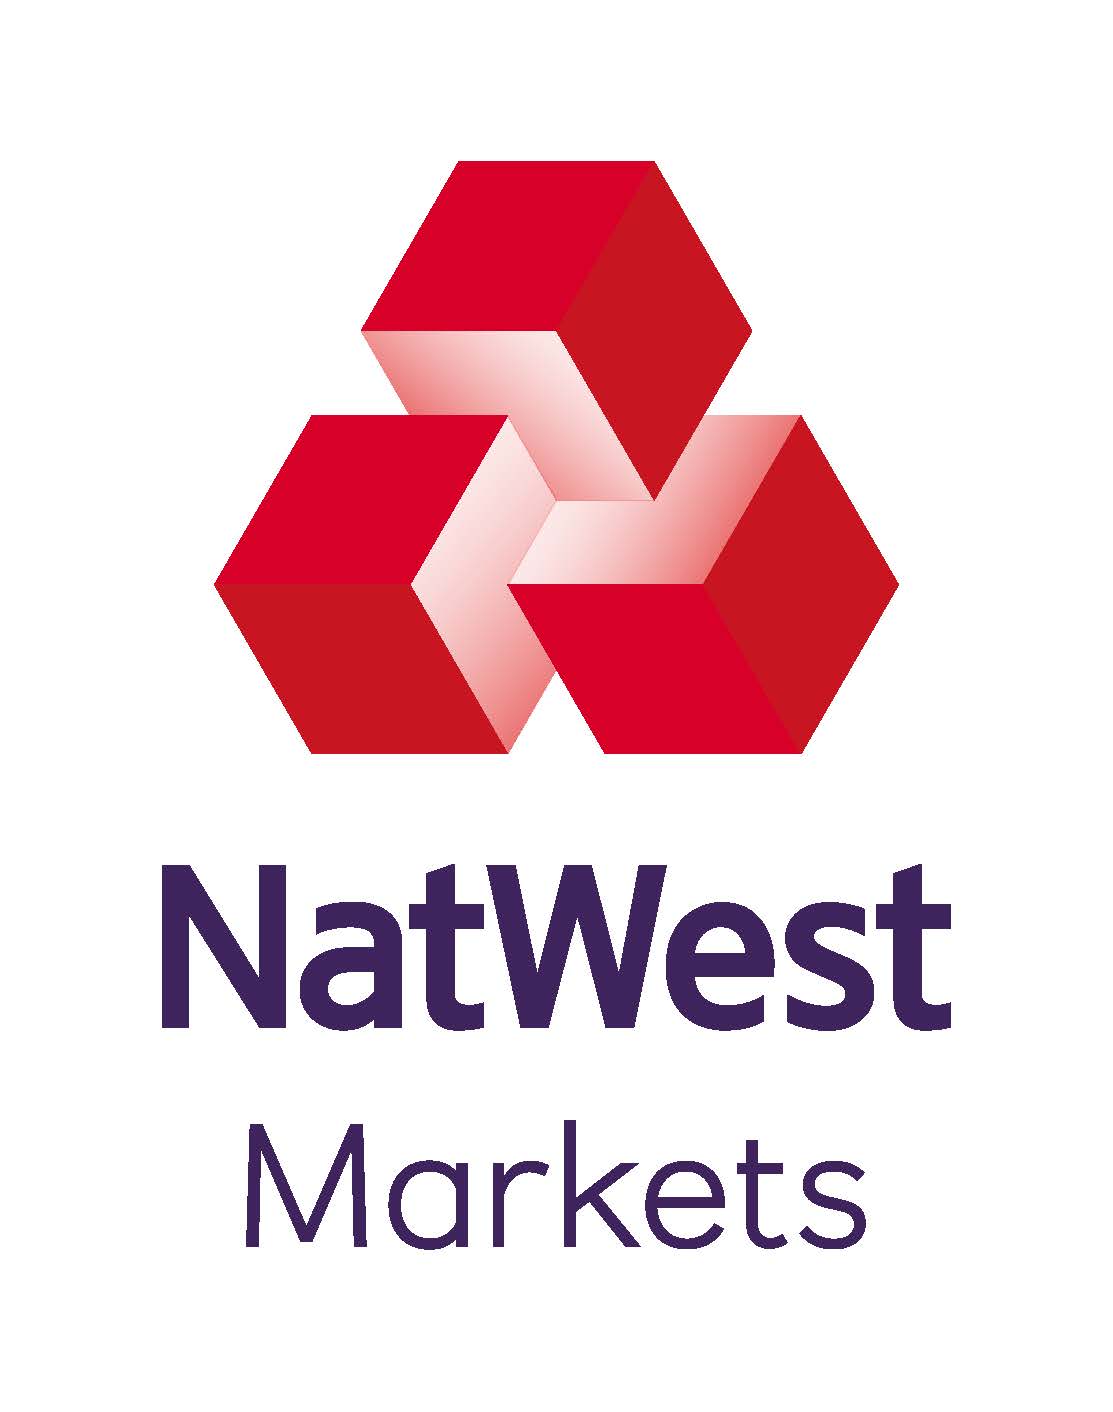 Natwest Markets Plc logo